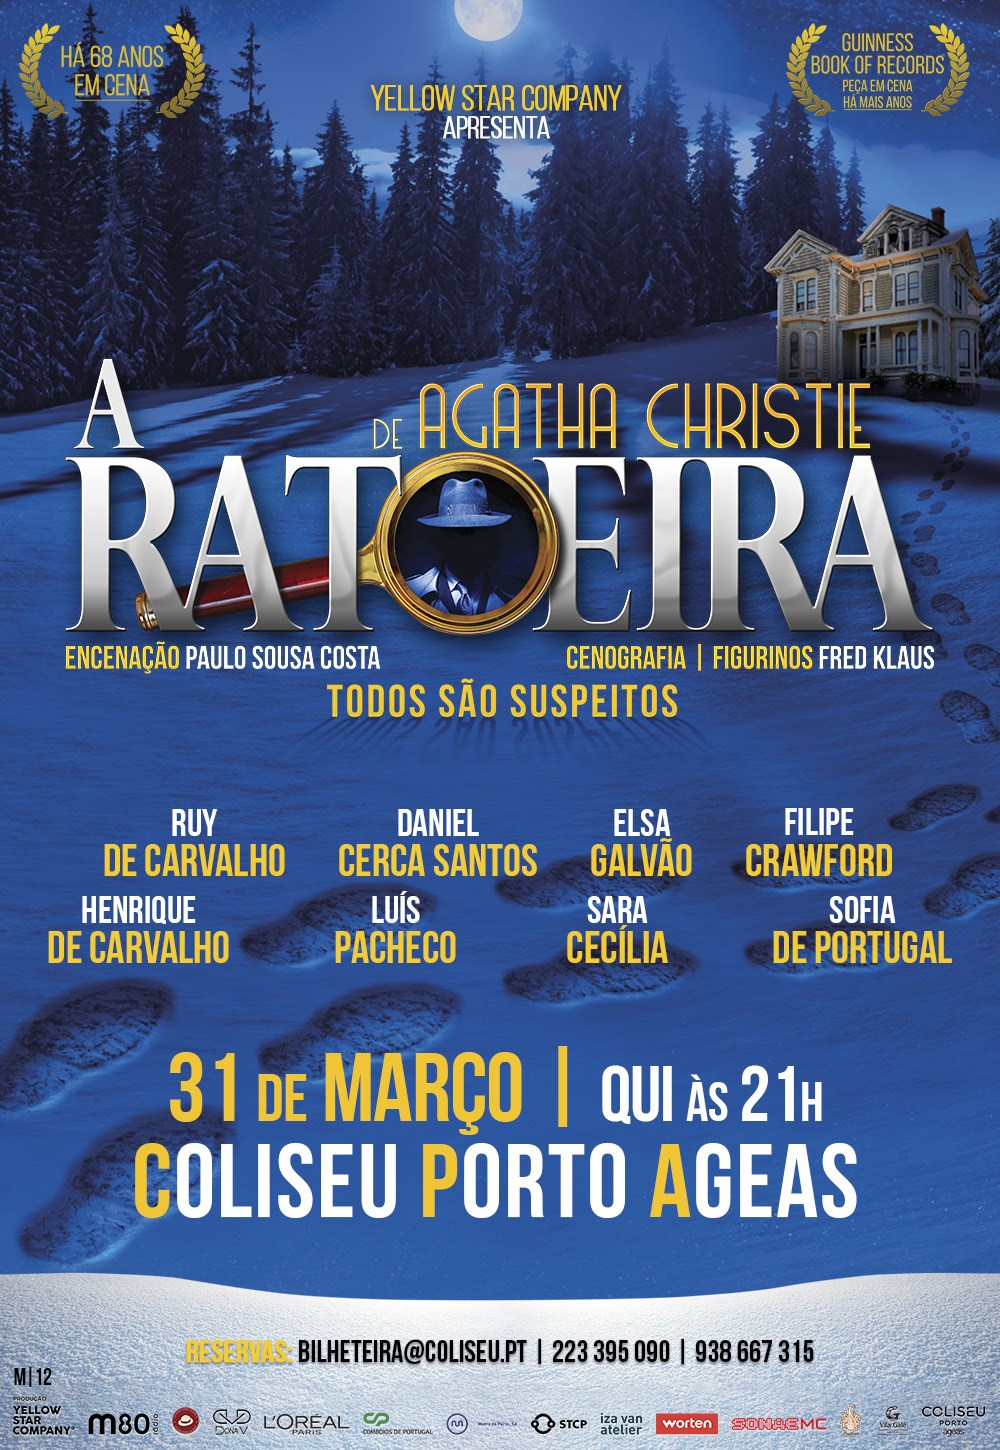 A Ratoeira - Event